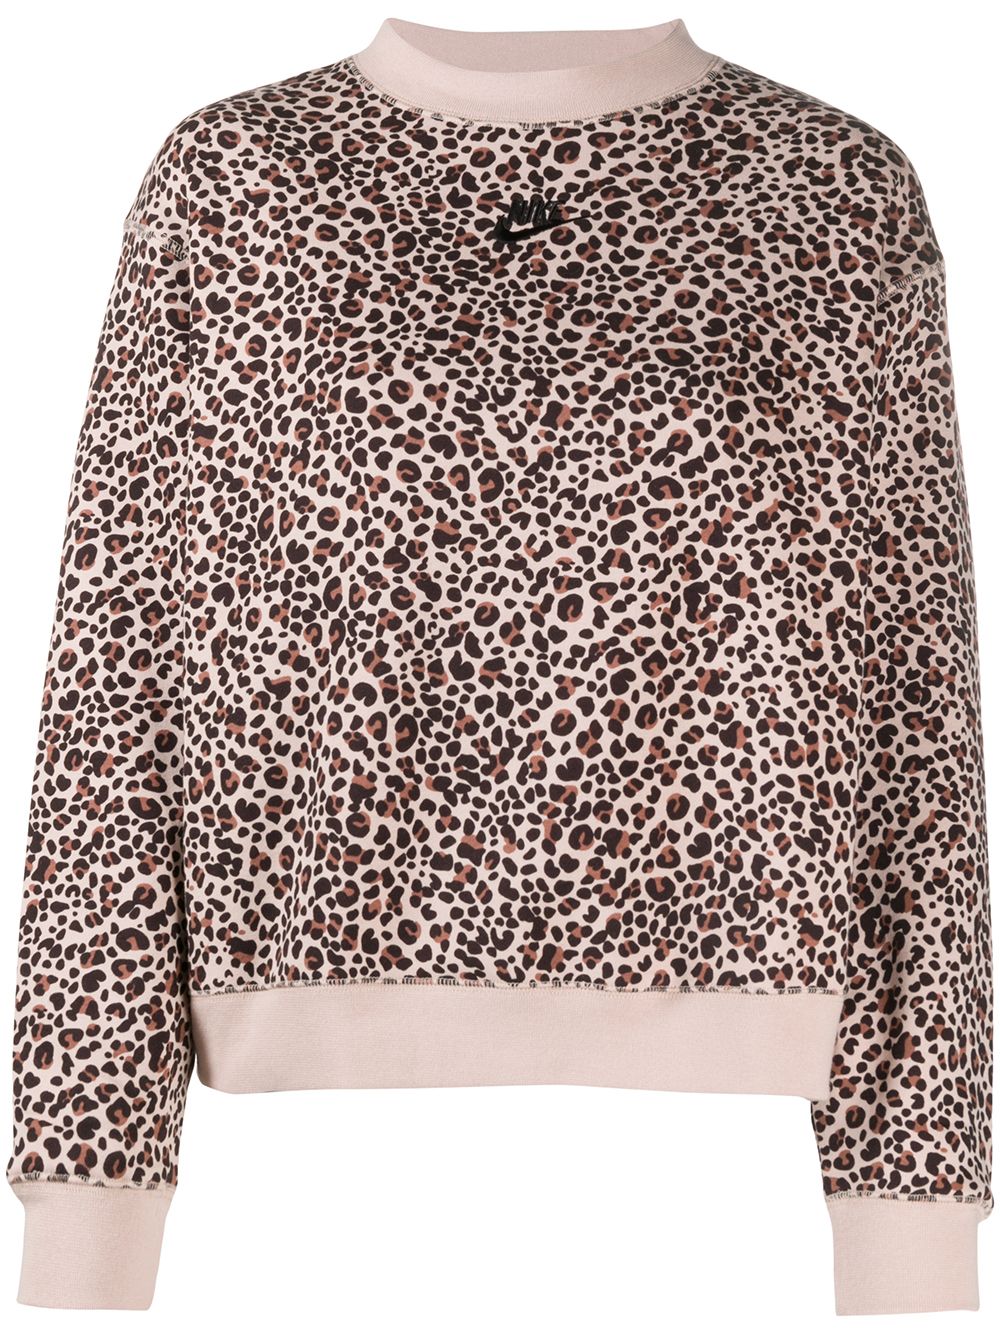 leopard print nike sweatshirt